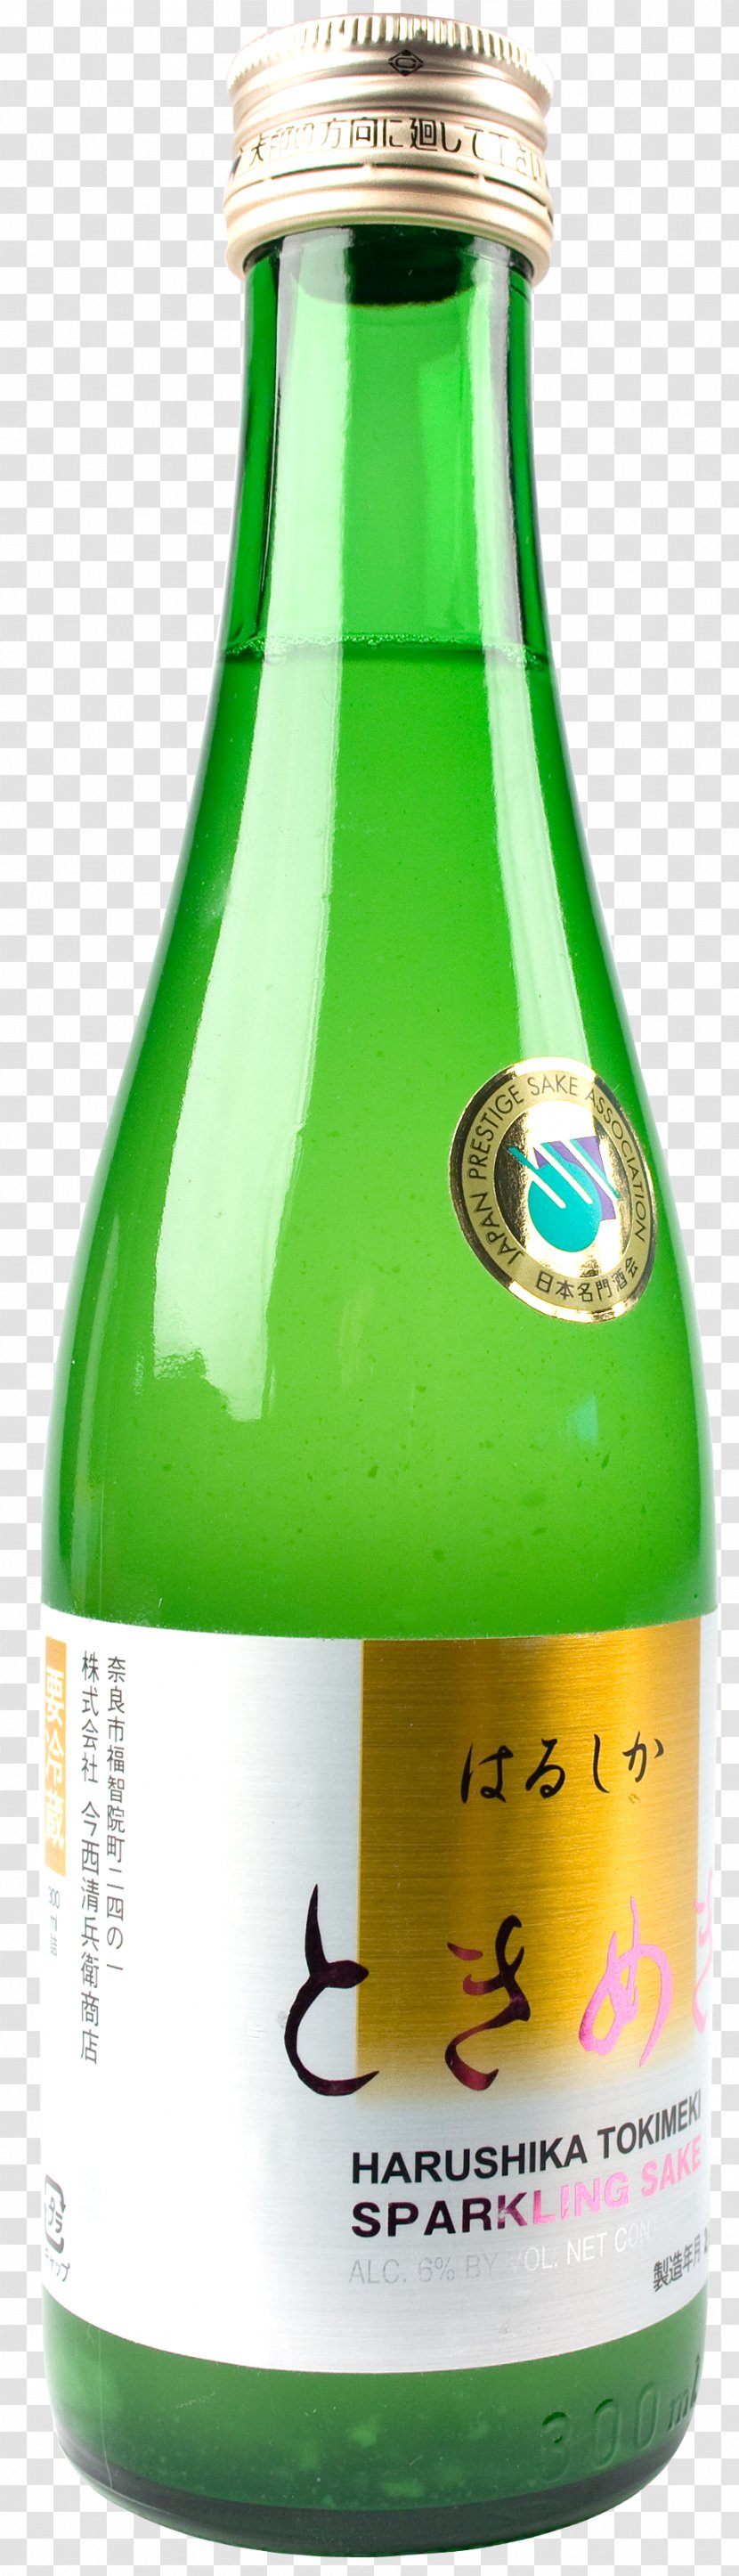 Liqueur Glass Bottle Product - Distilled Beverage - Shaoxing Rice Wine Transparent PNG